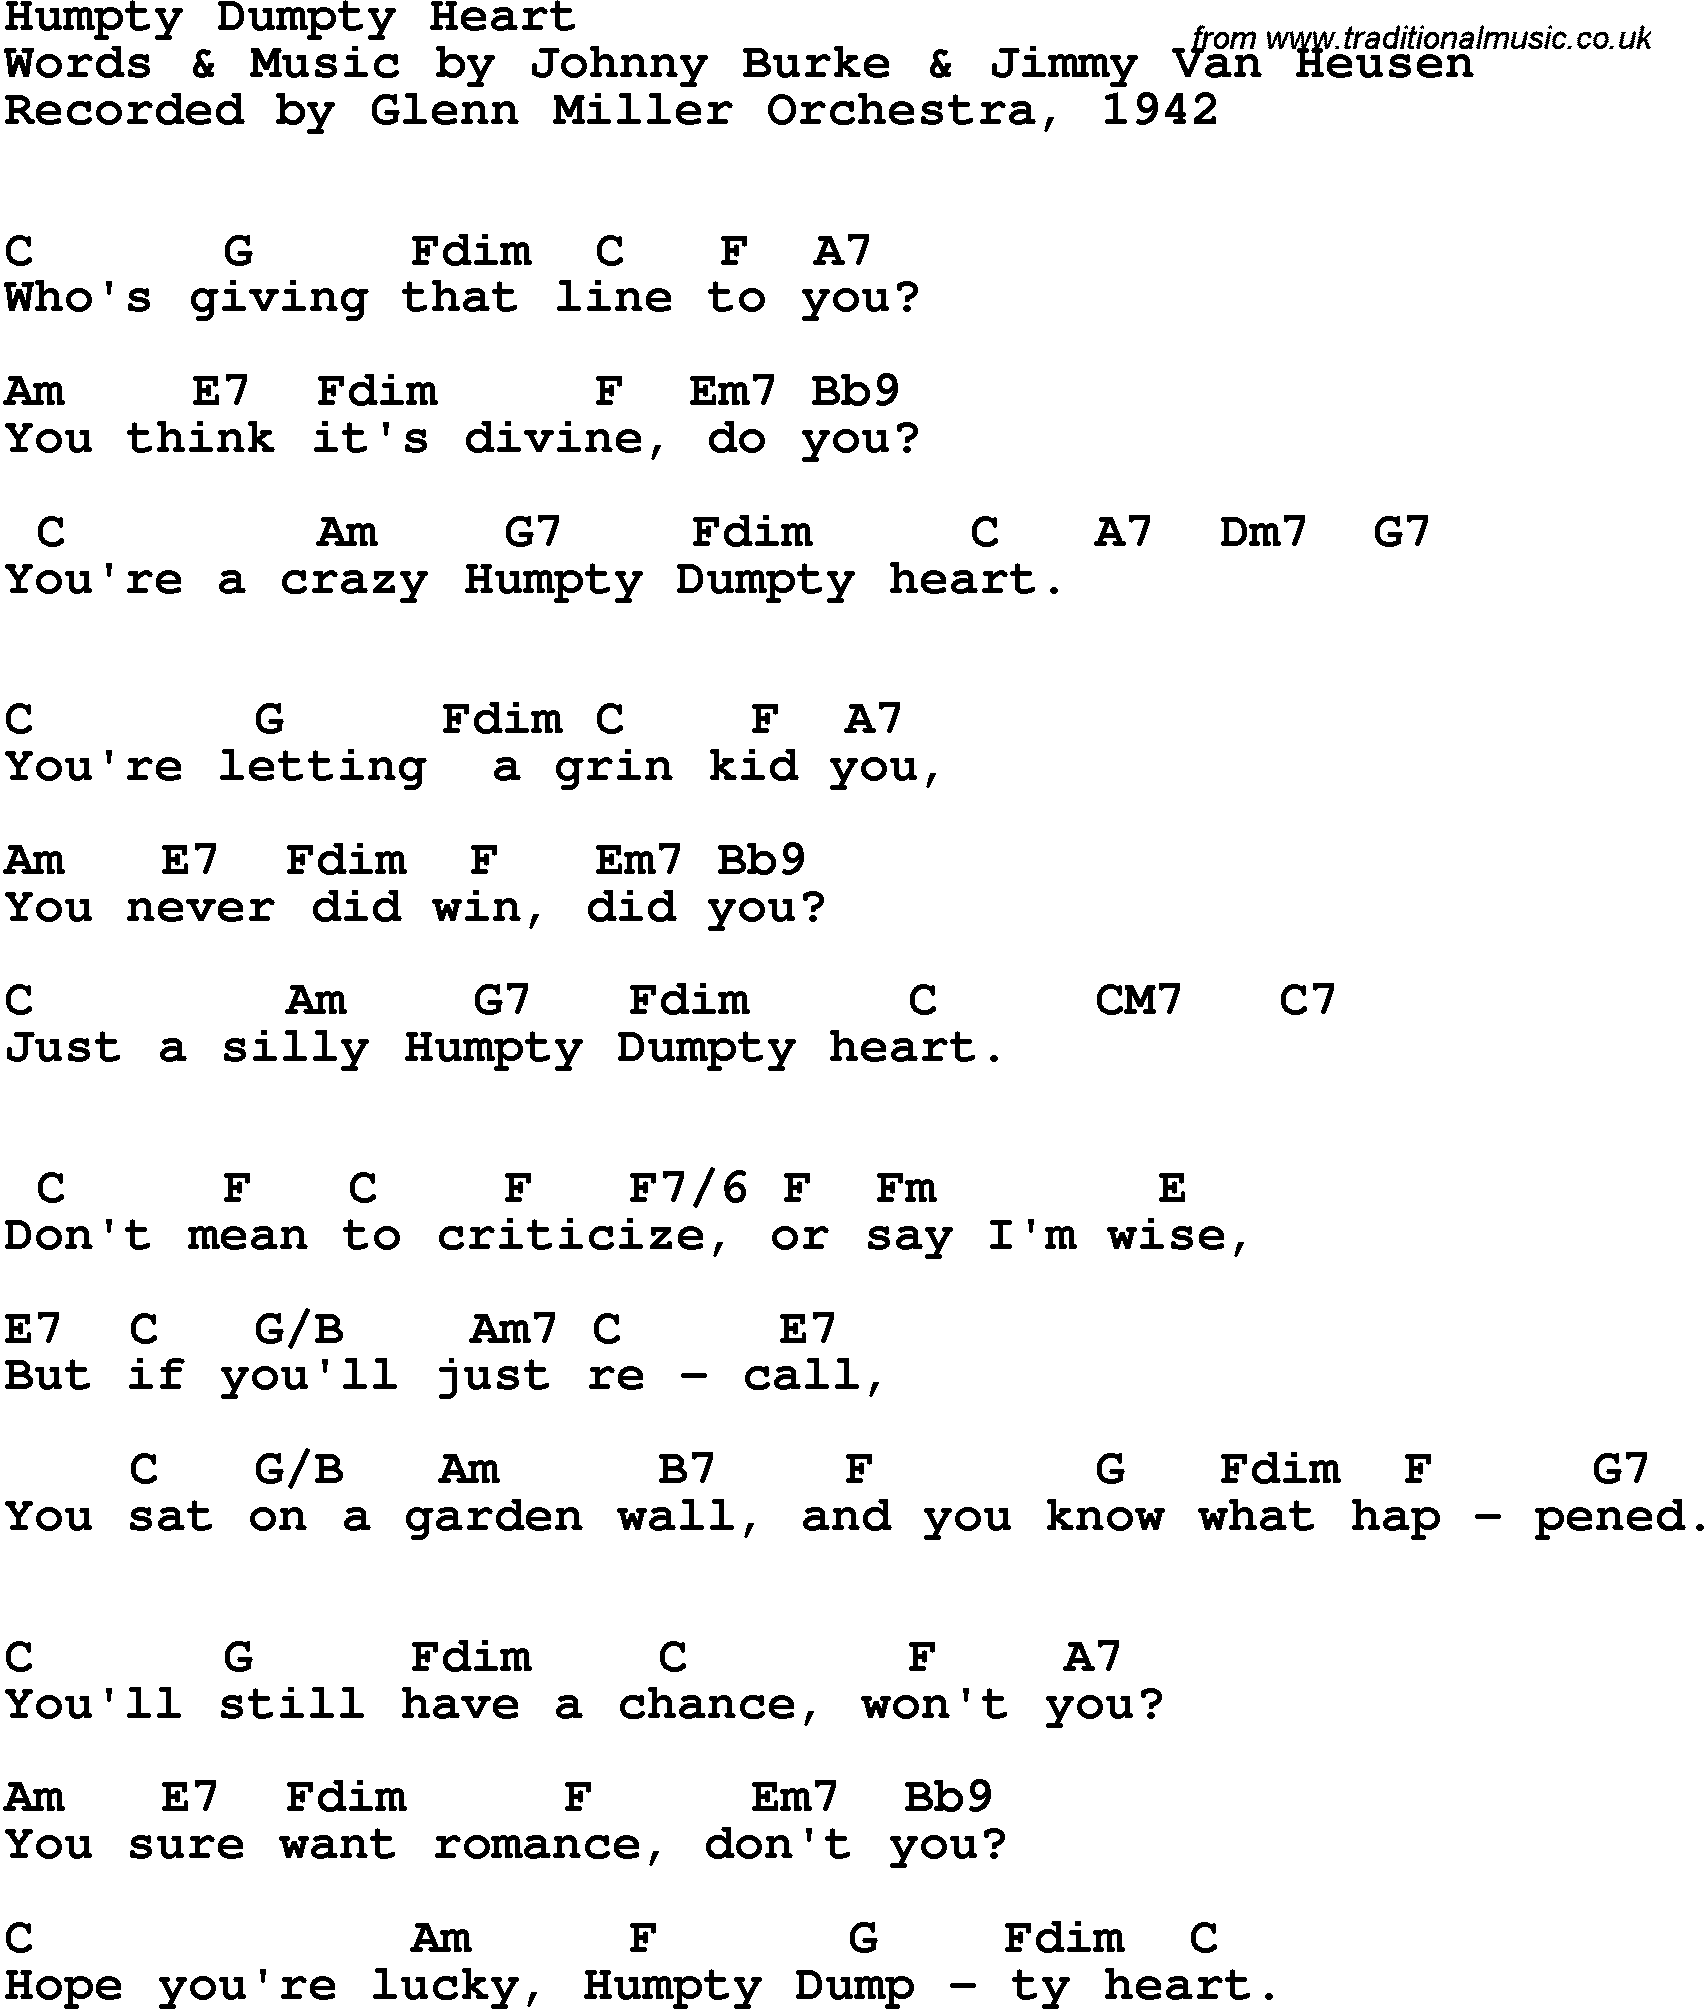 Song Lyrics with guitar chords for Humpty Dumpty Heart - Glenn Miller, 1942